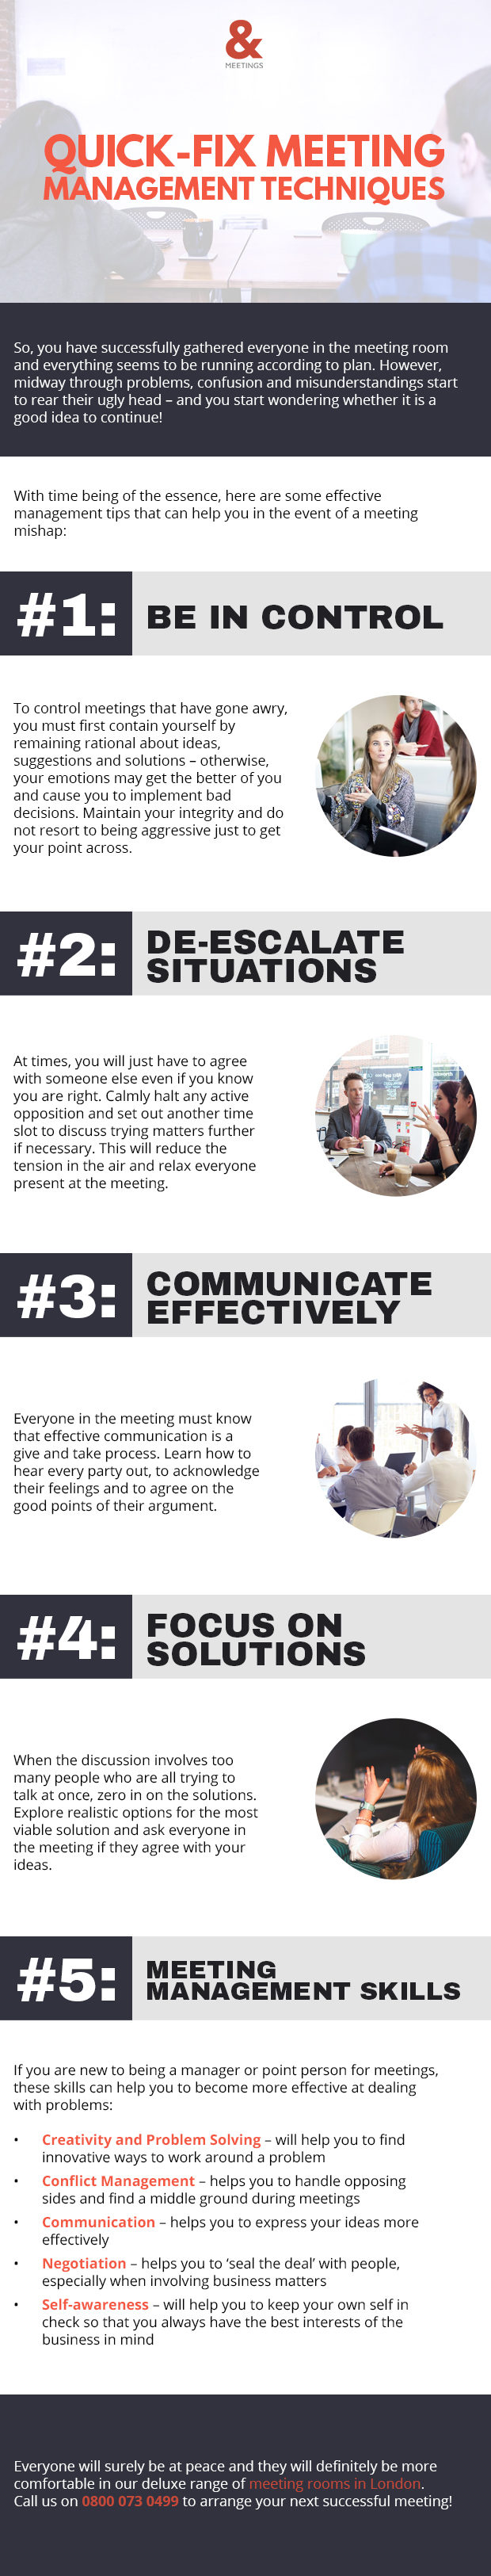 Quick-Fix Meeting Management Techniques